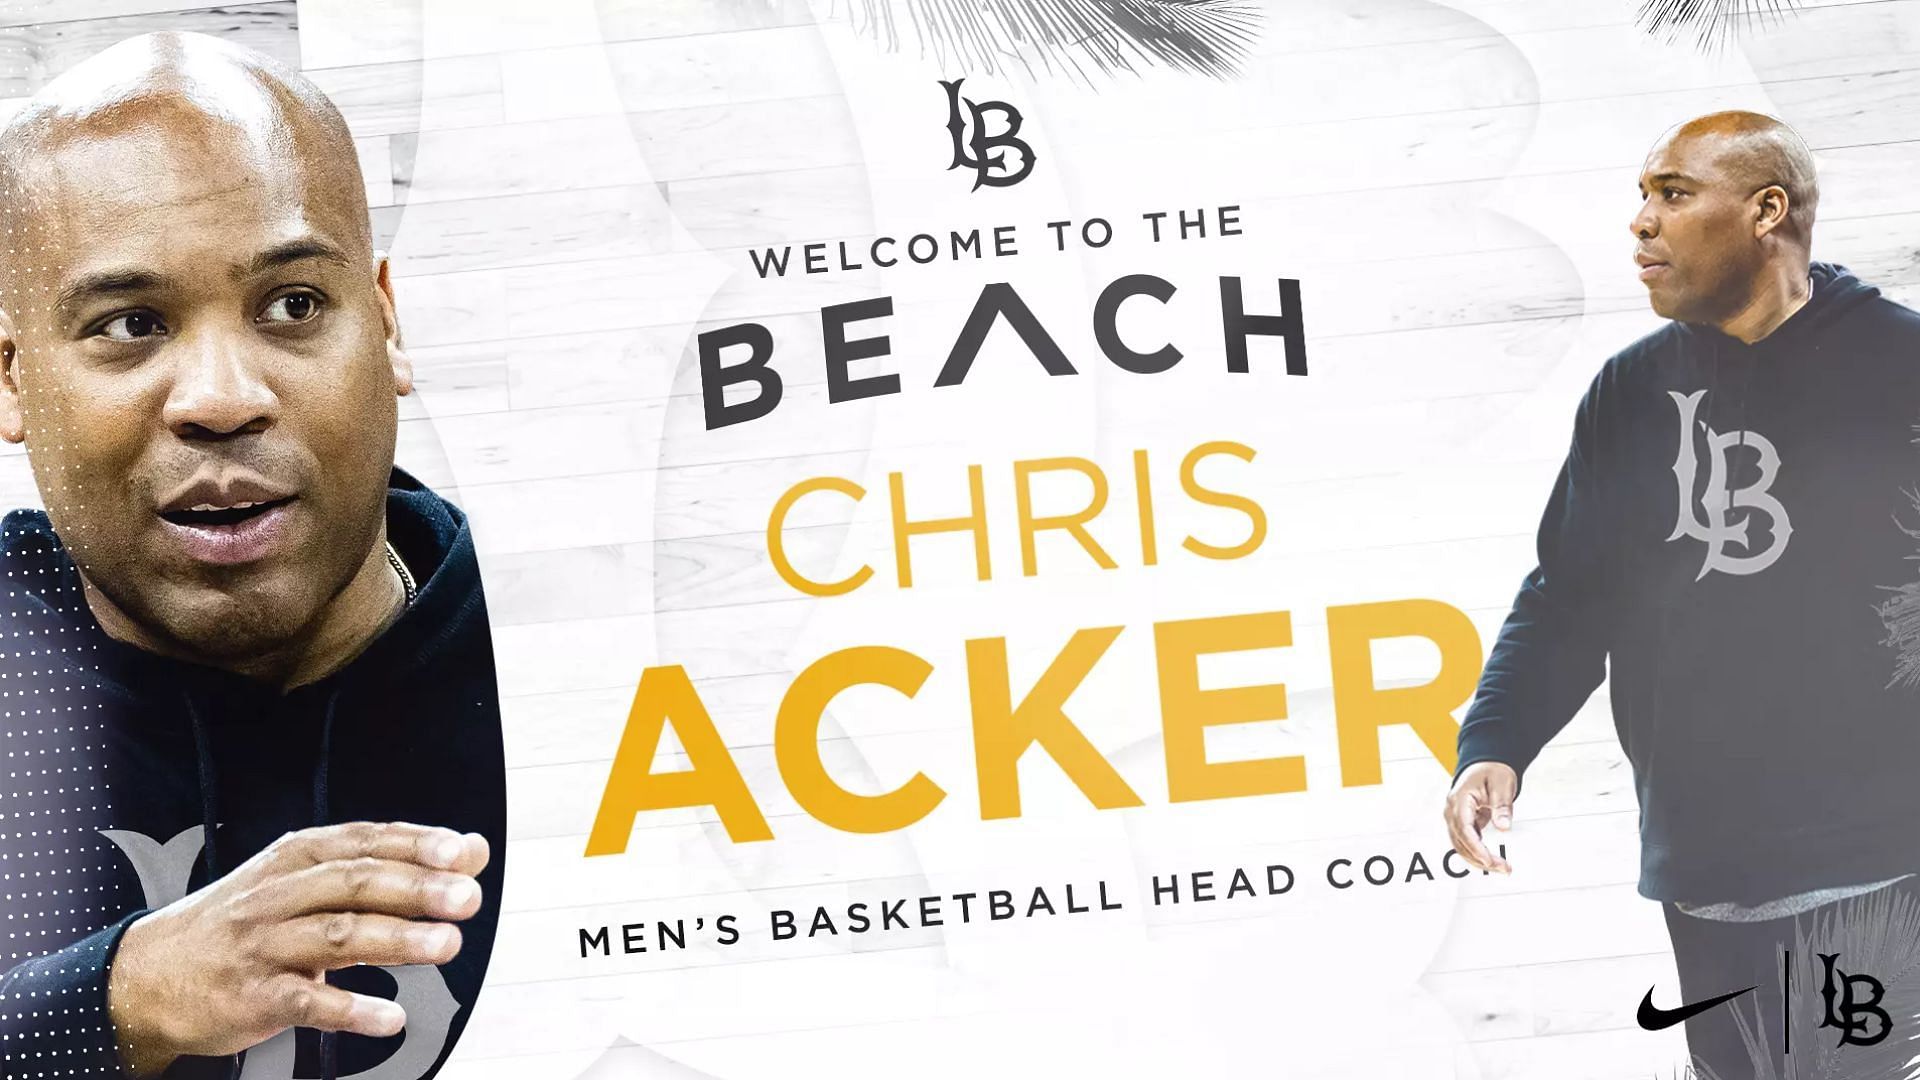 Long Beach State hired coach Chris Acker